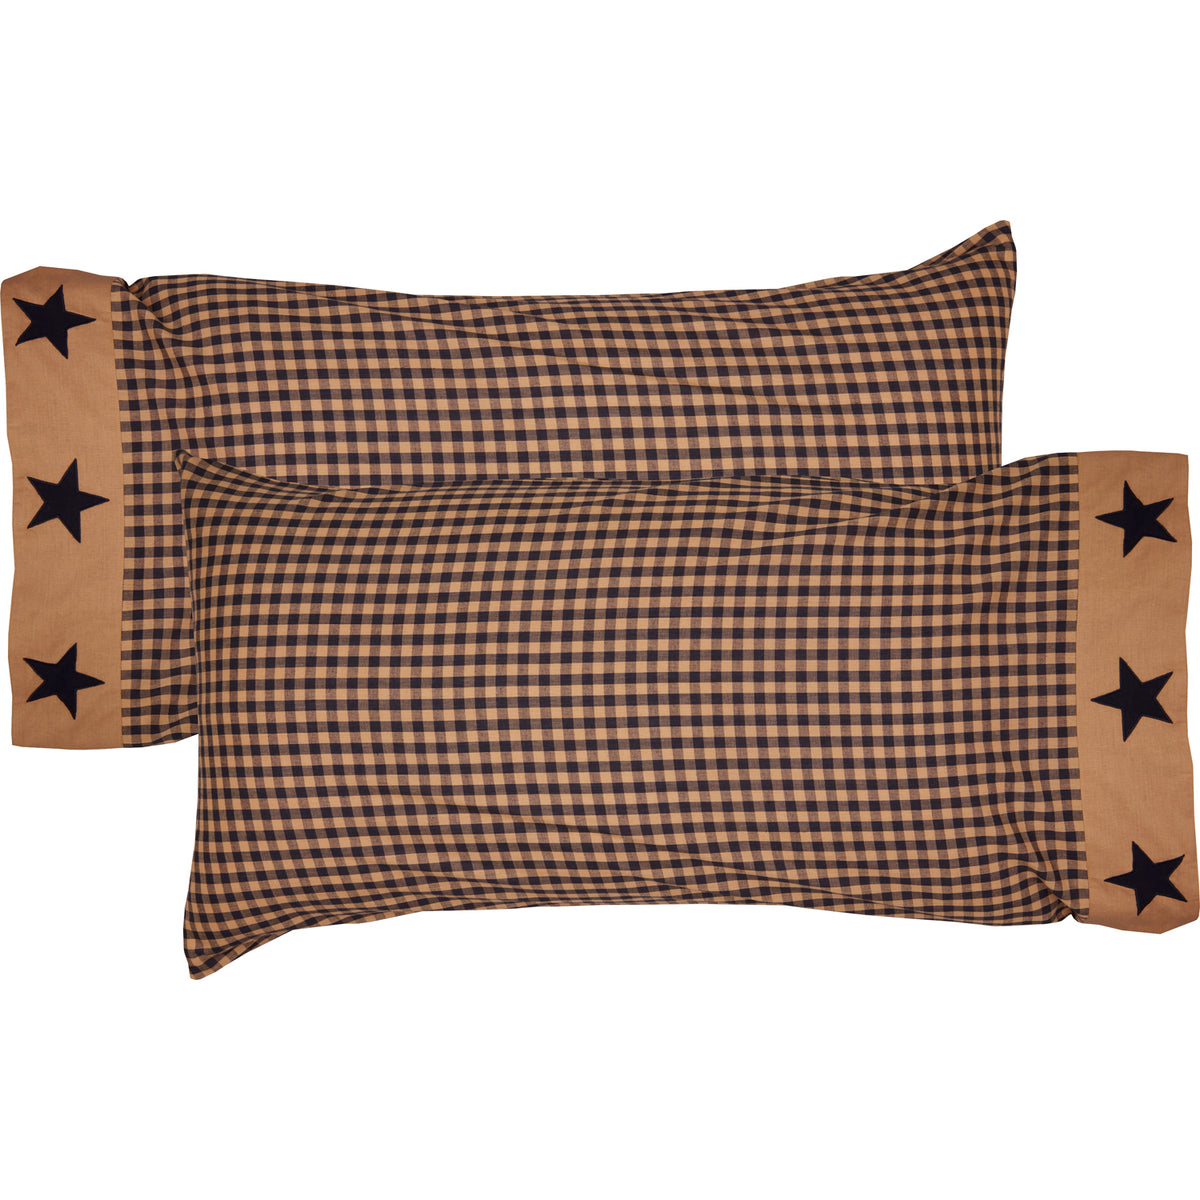 Mayflower Market Teton Star King Pillow Case w/Applique Star Set of 2 21x40 By VHC Brands